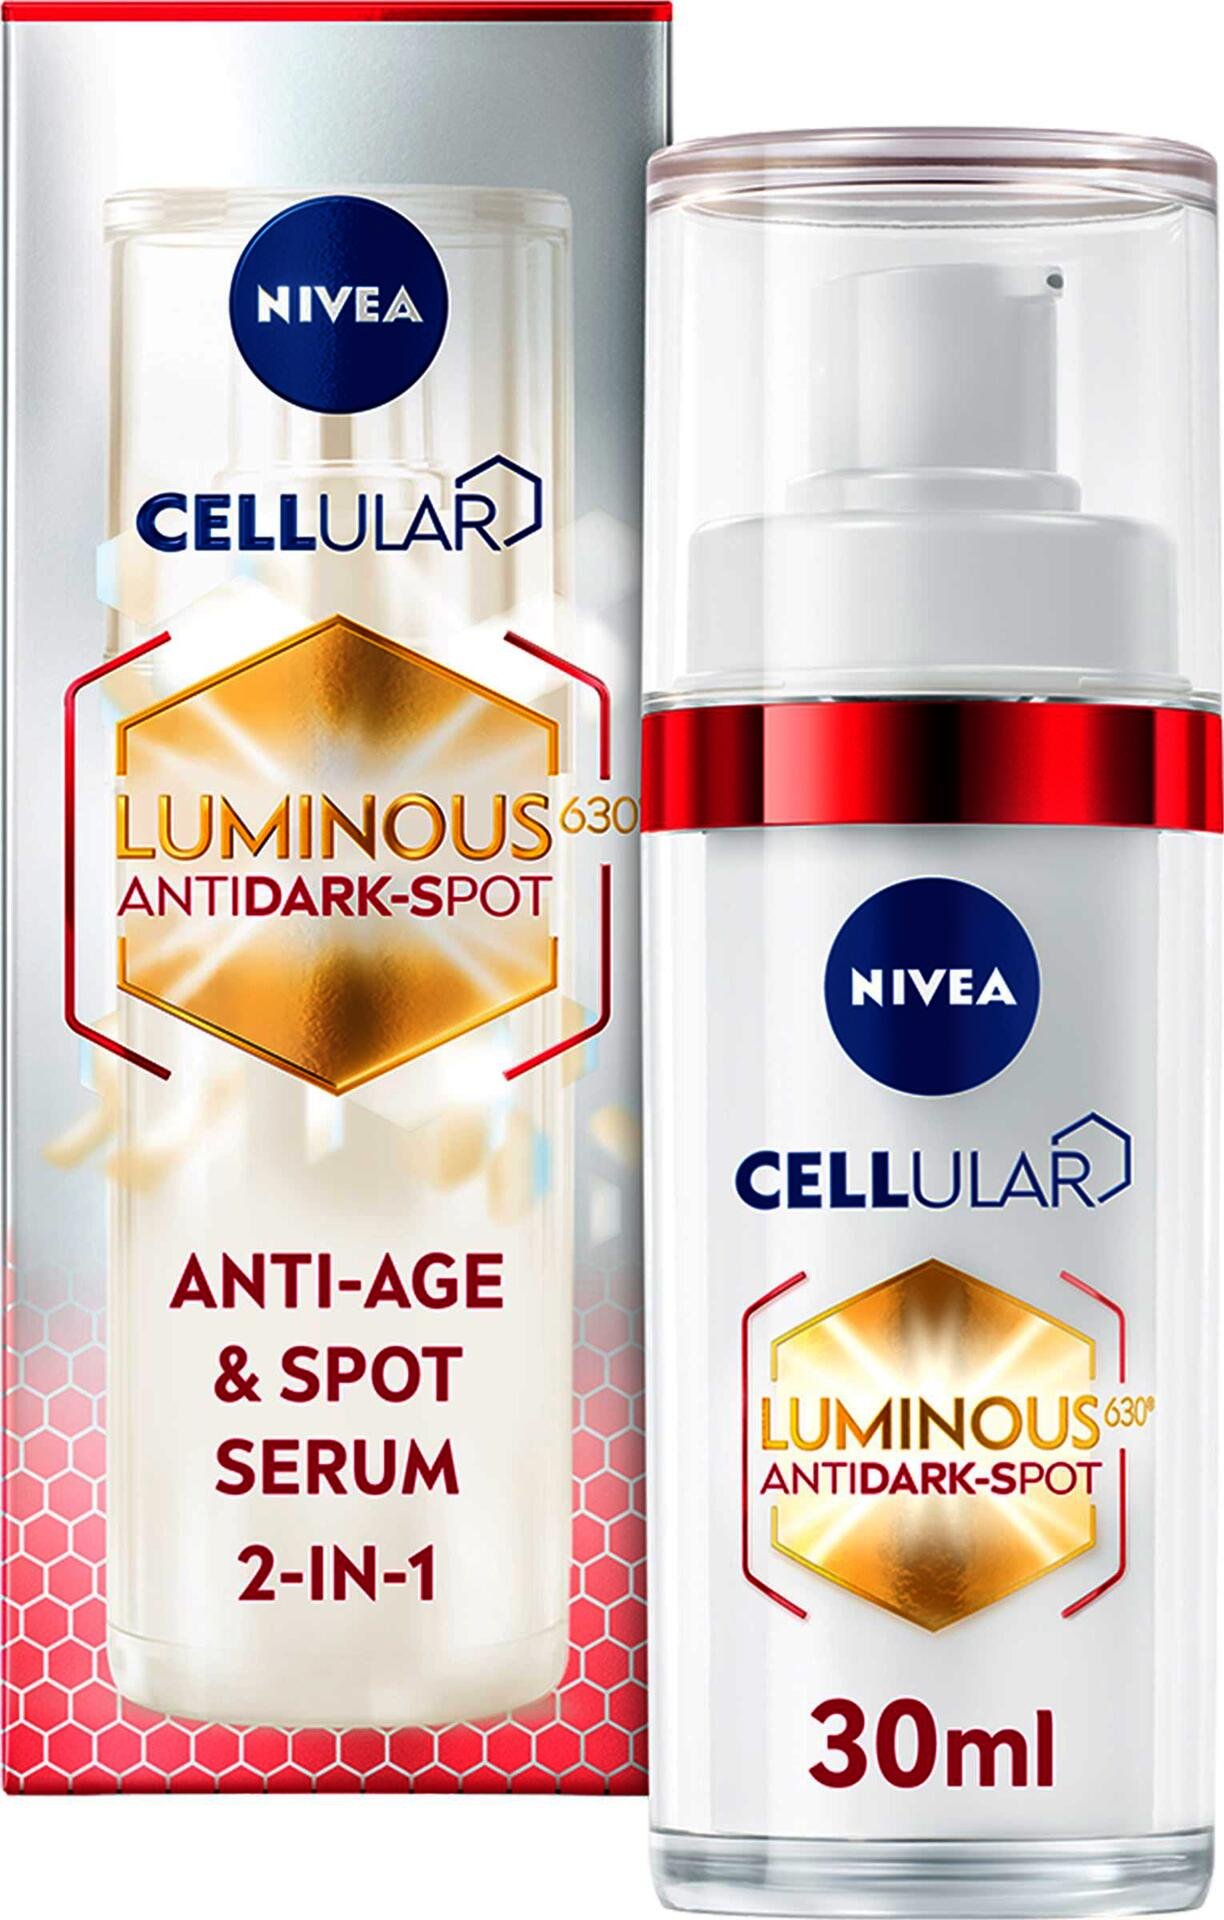 NIVEA Cellular Luminous630® Anti-Age & Dark-Spot Serum 30 ml